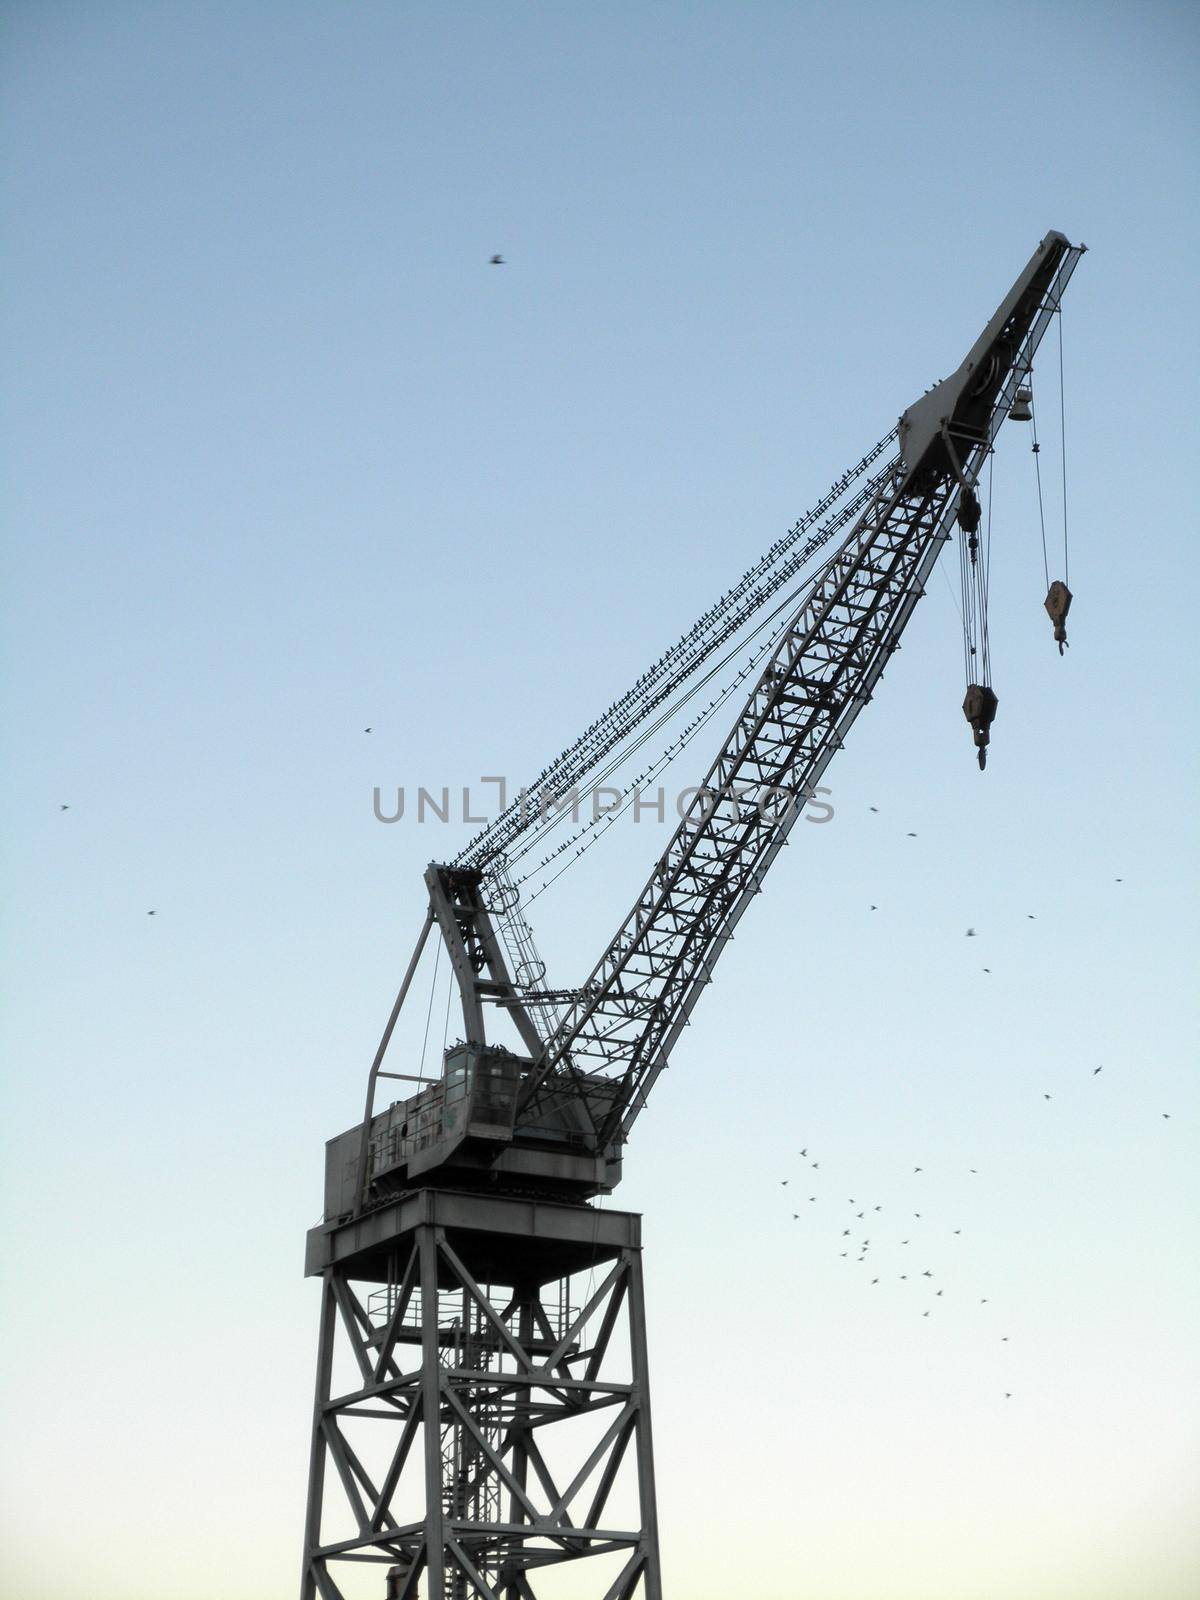 Cargo Ship Crane Covered in birds at Dusk in San Francisco, California.  